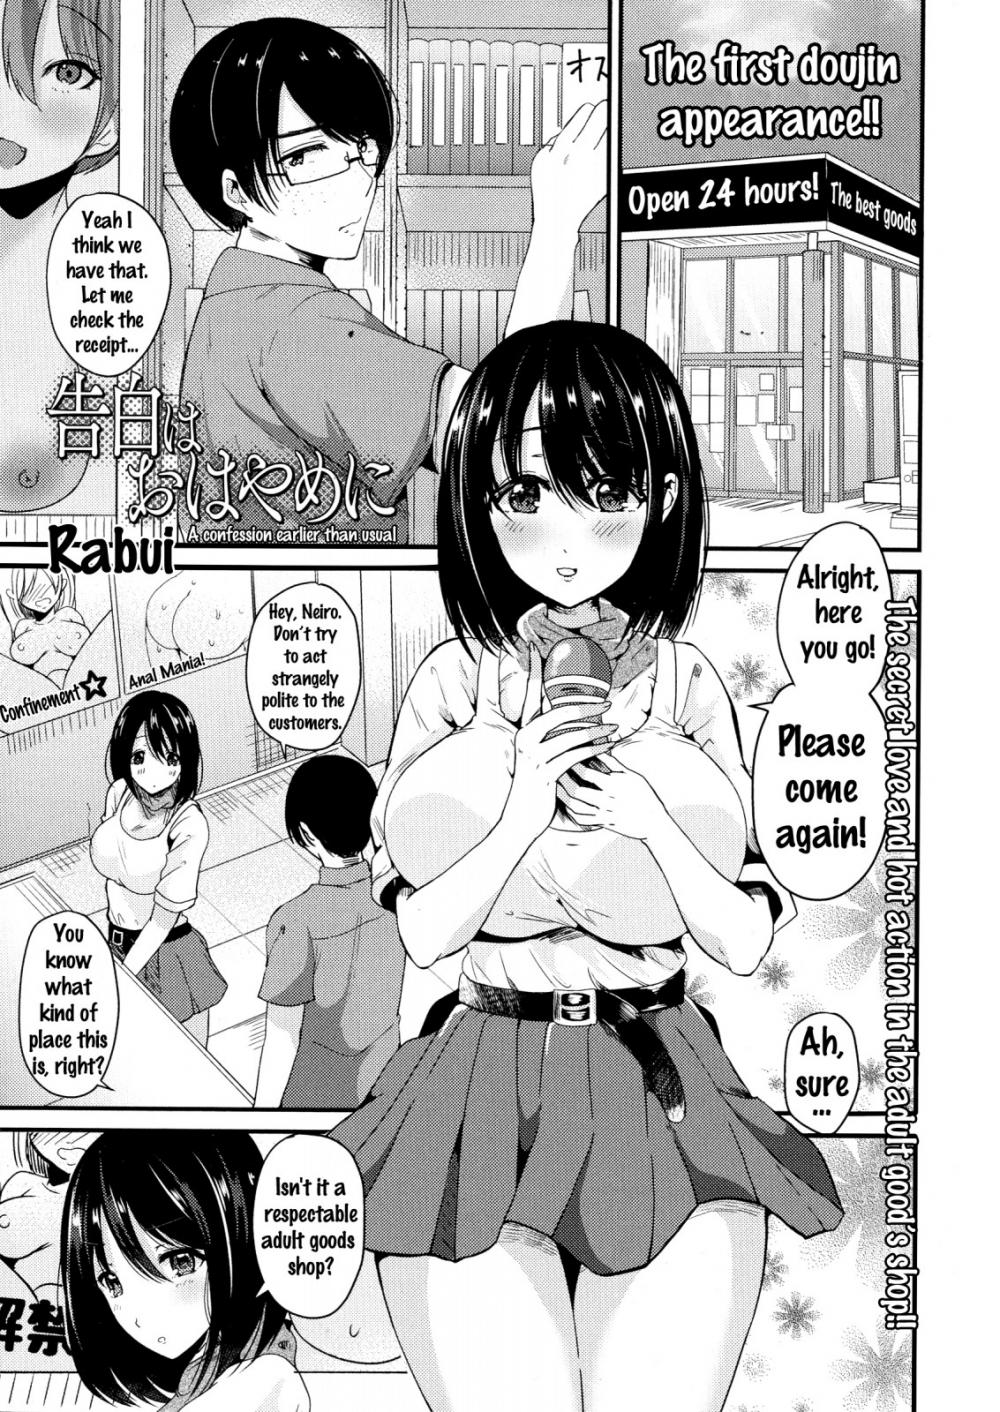 Hentai Manga Comic-A Confession Earlier Than Usual-Read-1